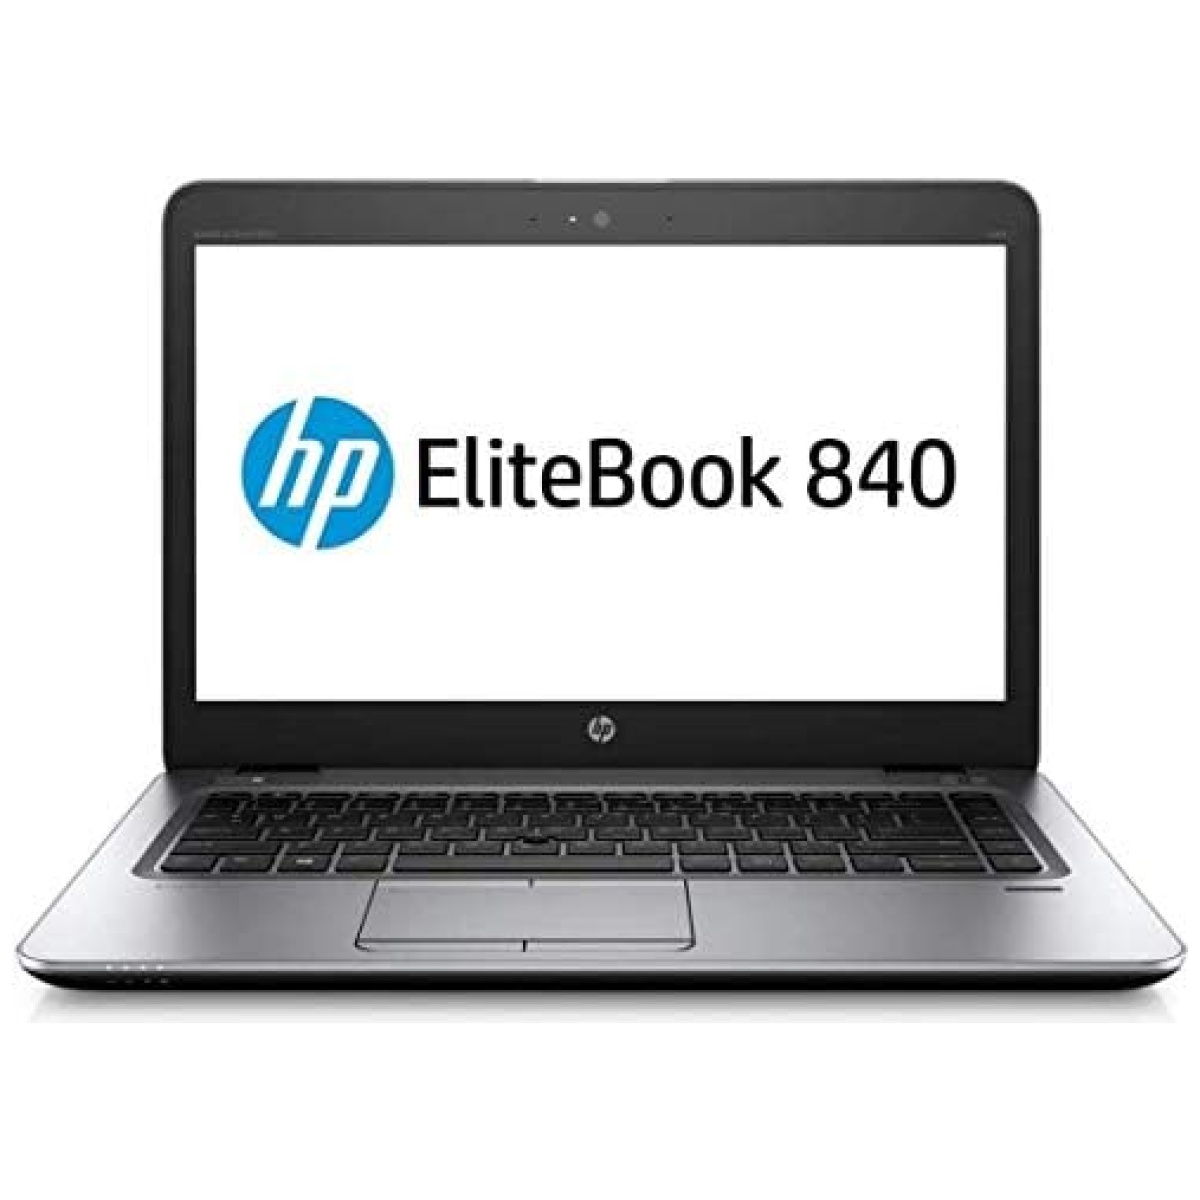 portatil hp elitebook